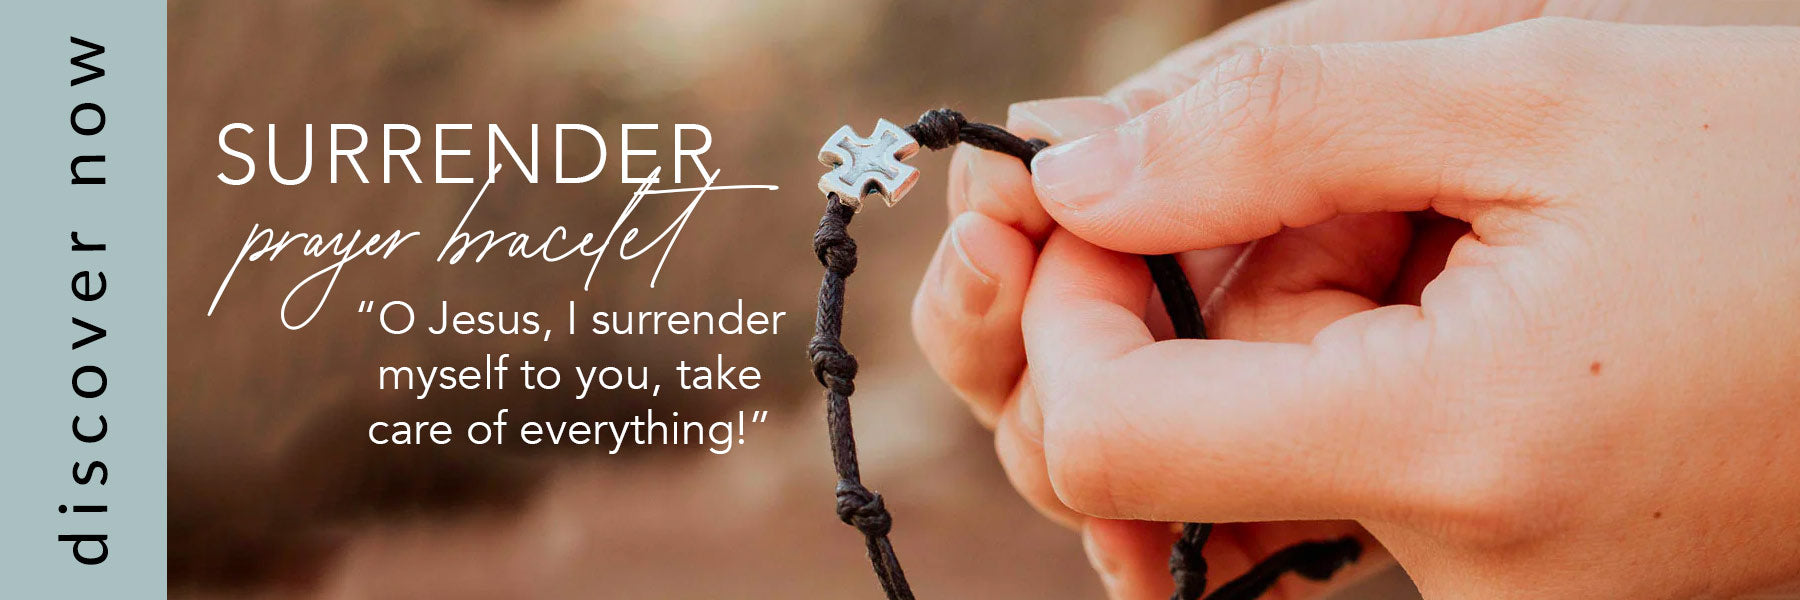 surrender prayer bracelet being used as a prayer chaplet